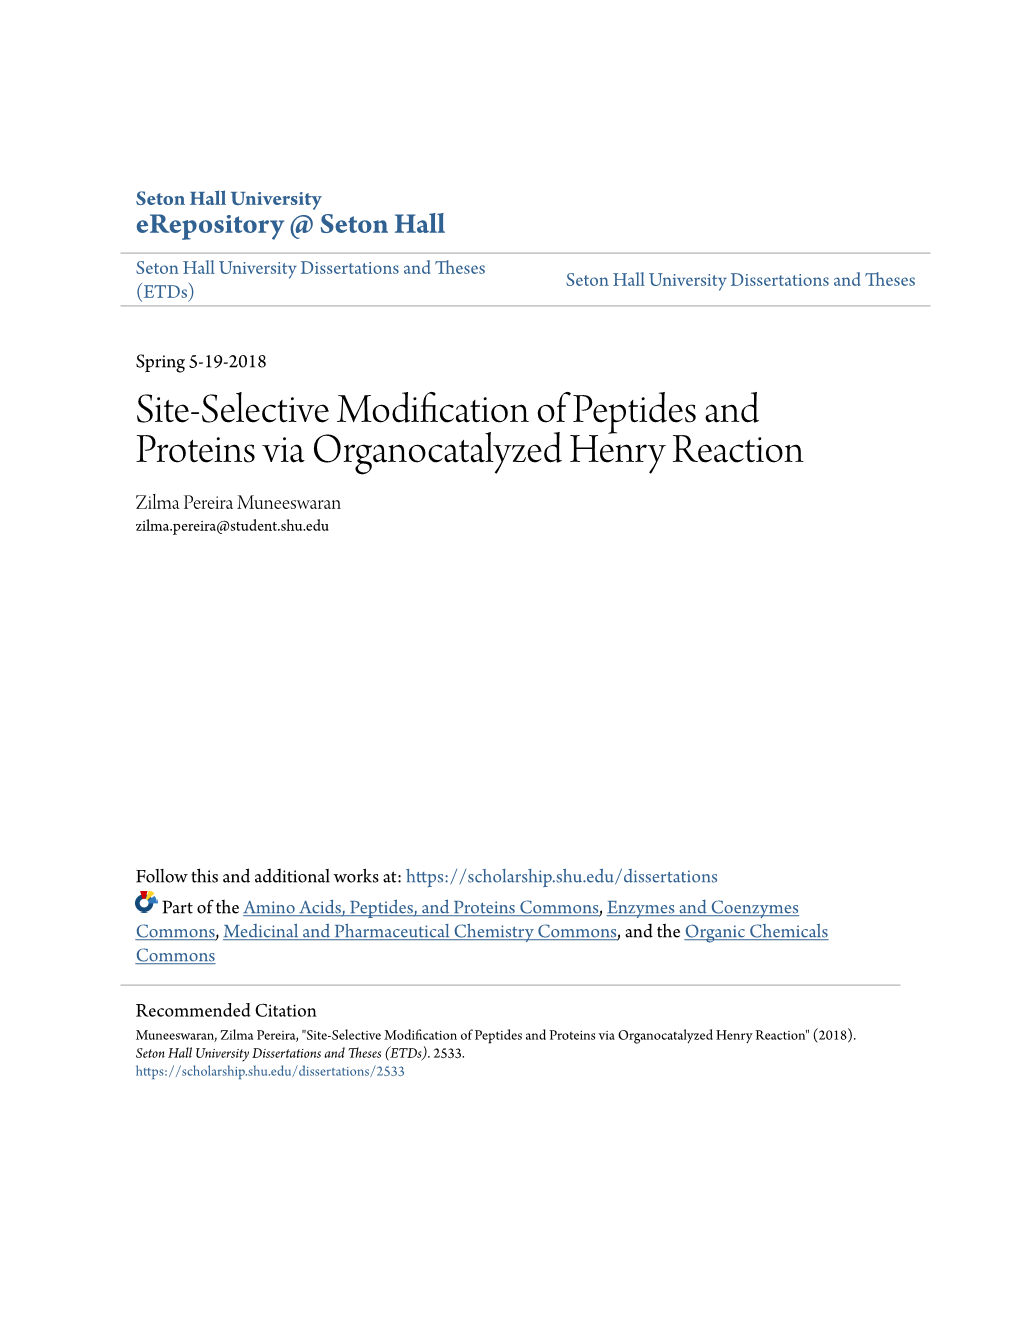 Site-Selective Modification of Peptides and Proteins Via Organocatalyzed Henry Reaction Zilma Pereira Muneeswaran Zilma.Pereira@Student.Shu.Edu